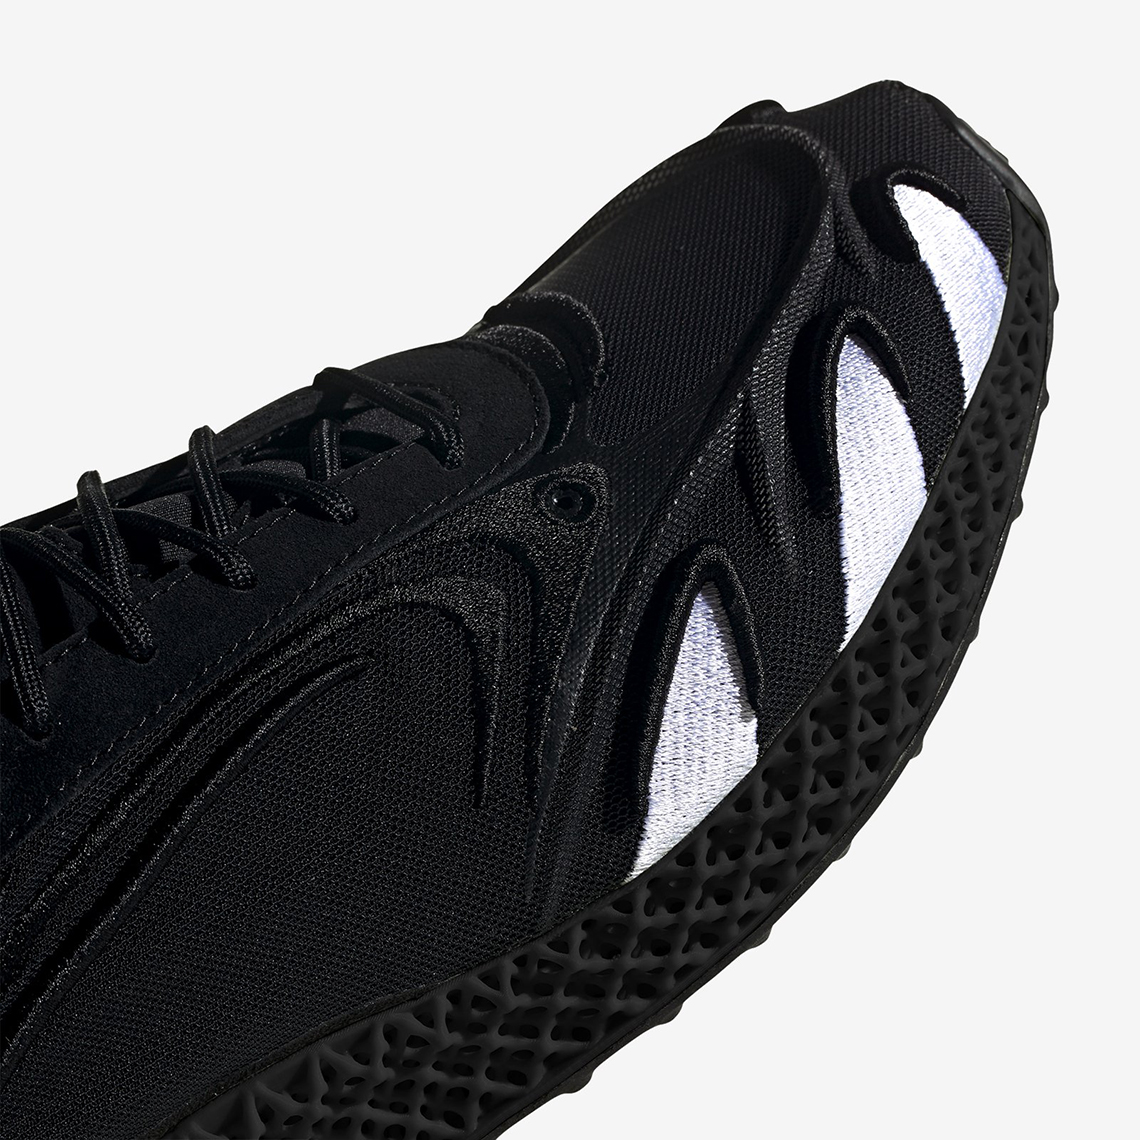 adidas Y-3 Runner 4D FU9208 FU9207 Release Date | SneakerNews.com